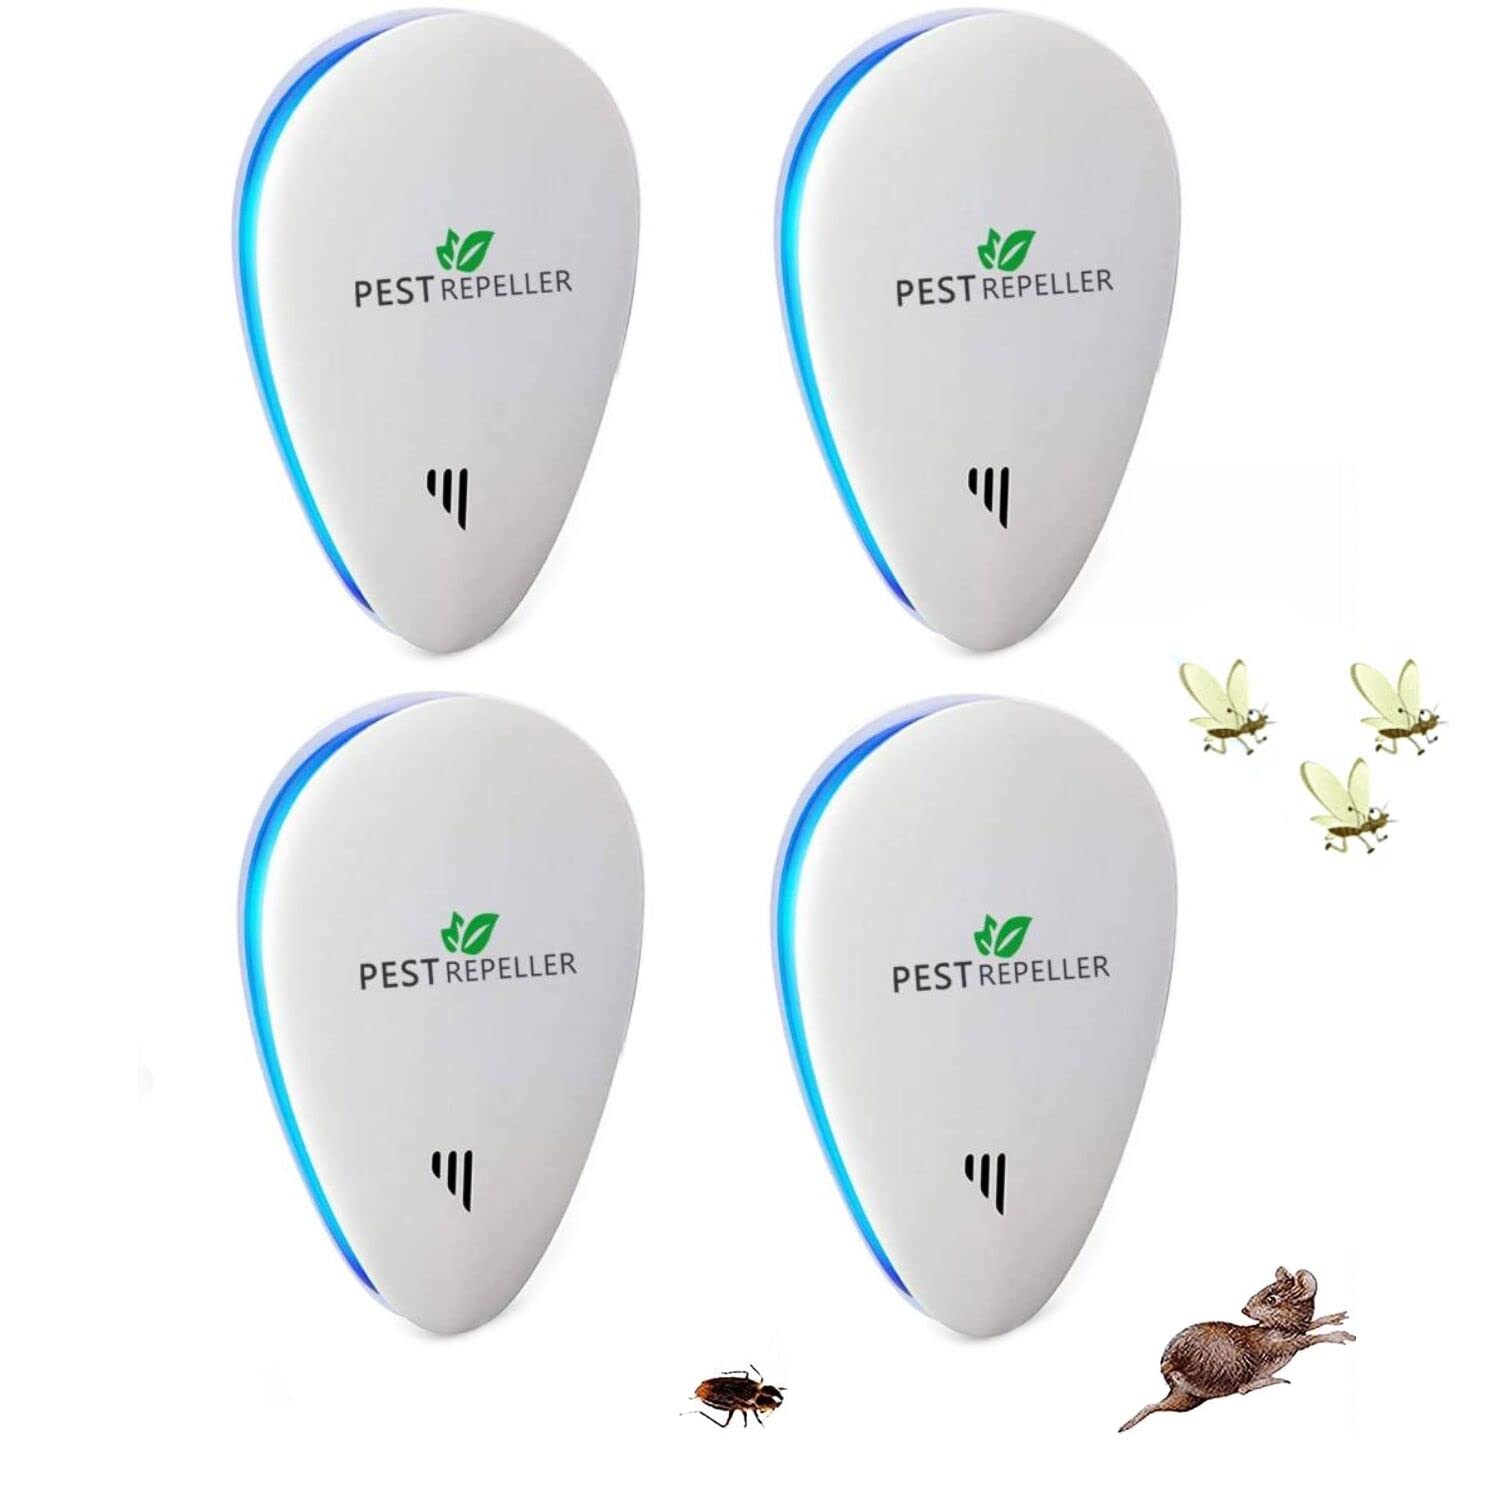  Mice Repellent Plug-in Ultrasonic Pest Repeller